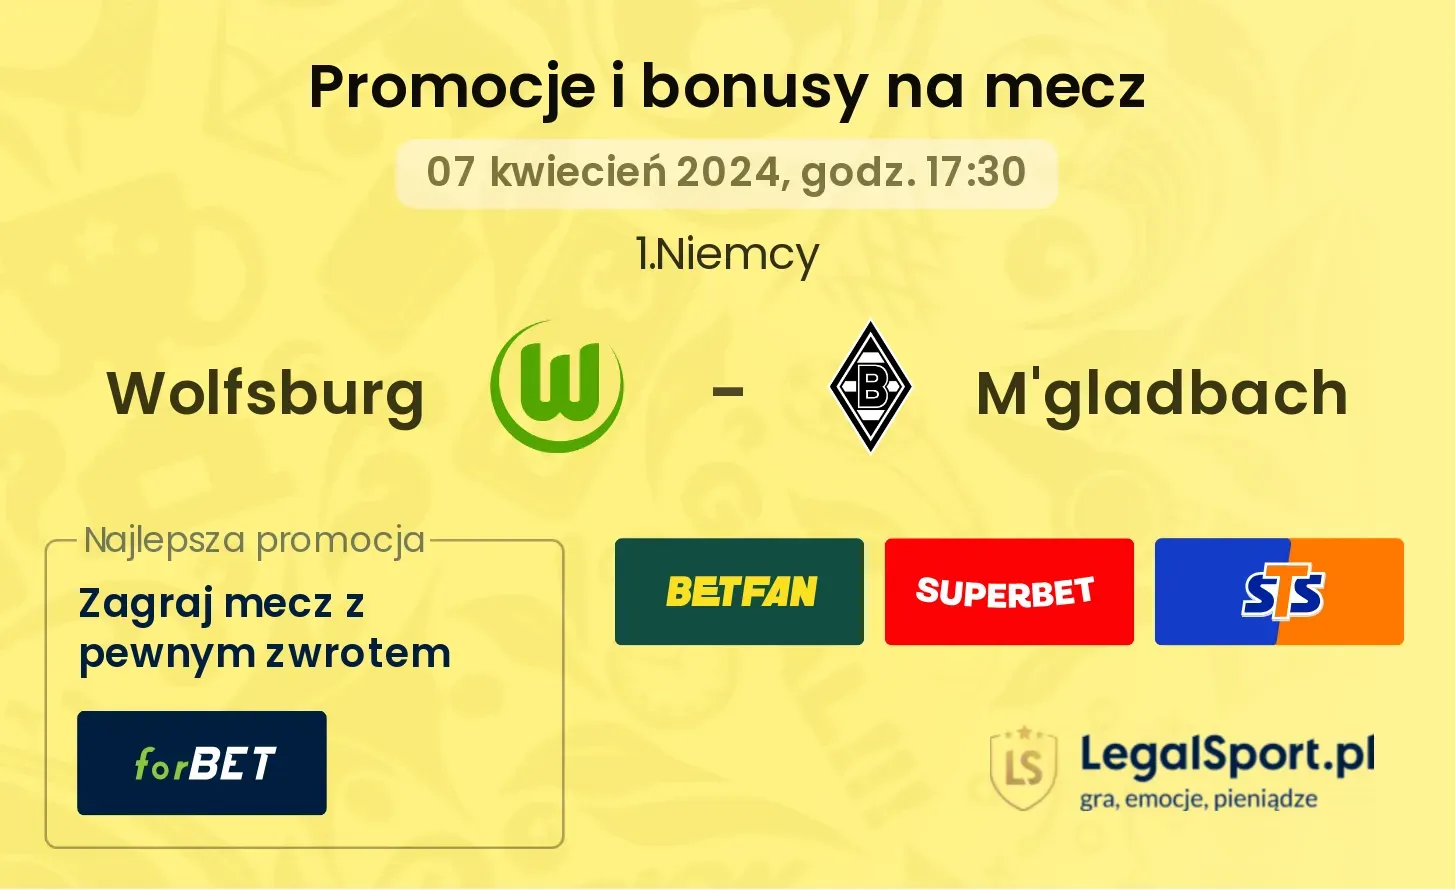 Wolfsburg - M'gladbach promocje bonusy na mecz